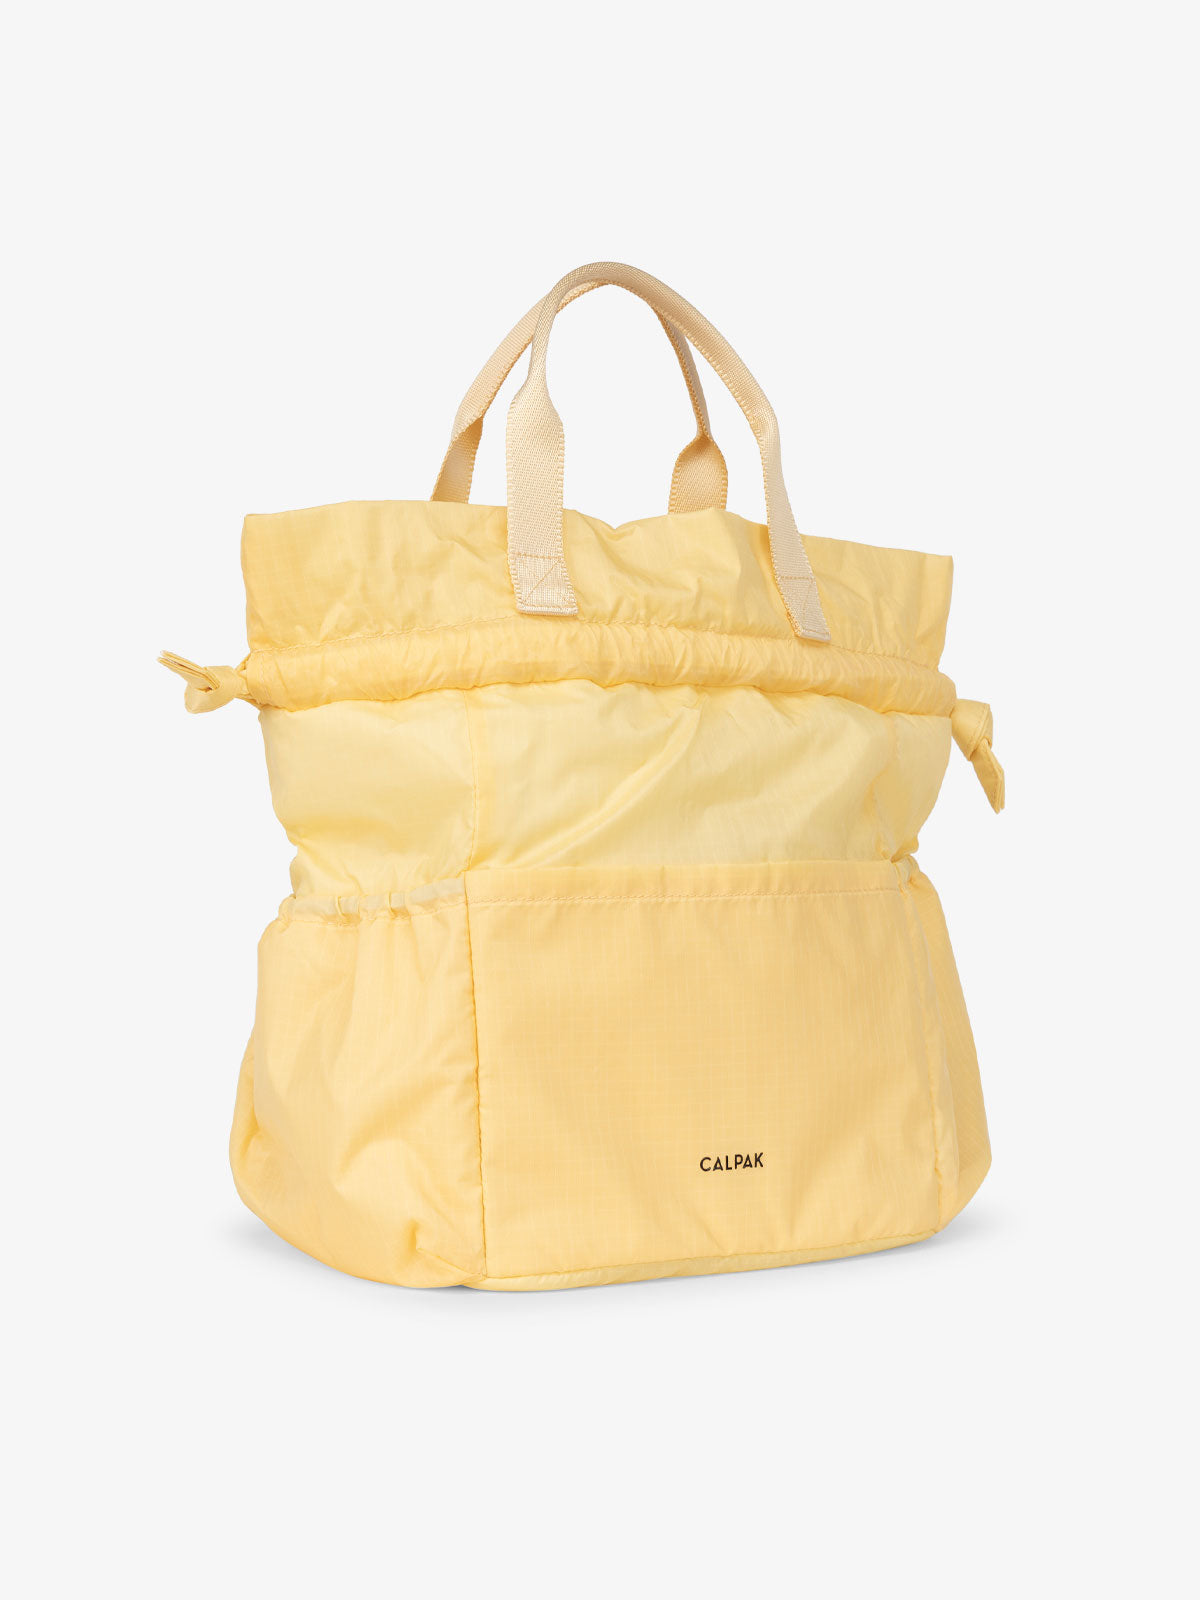 CALPAK insulated lunch bag in yellow lemonade